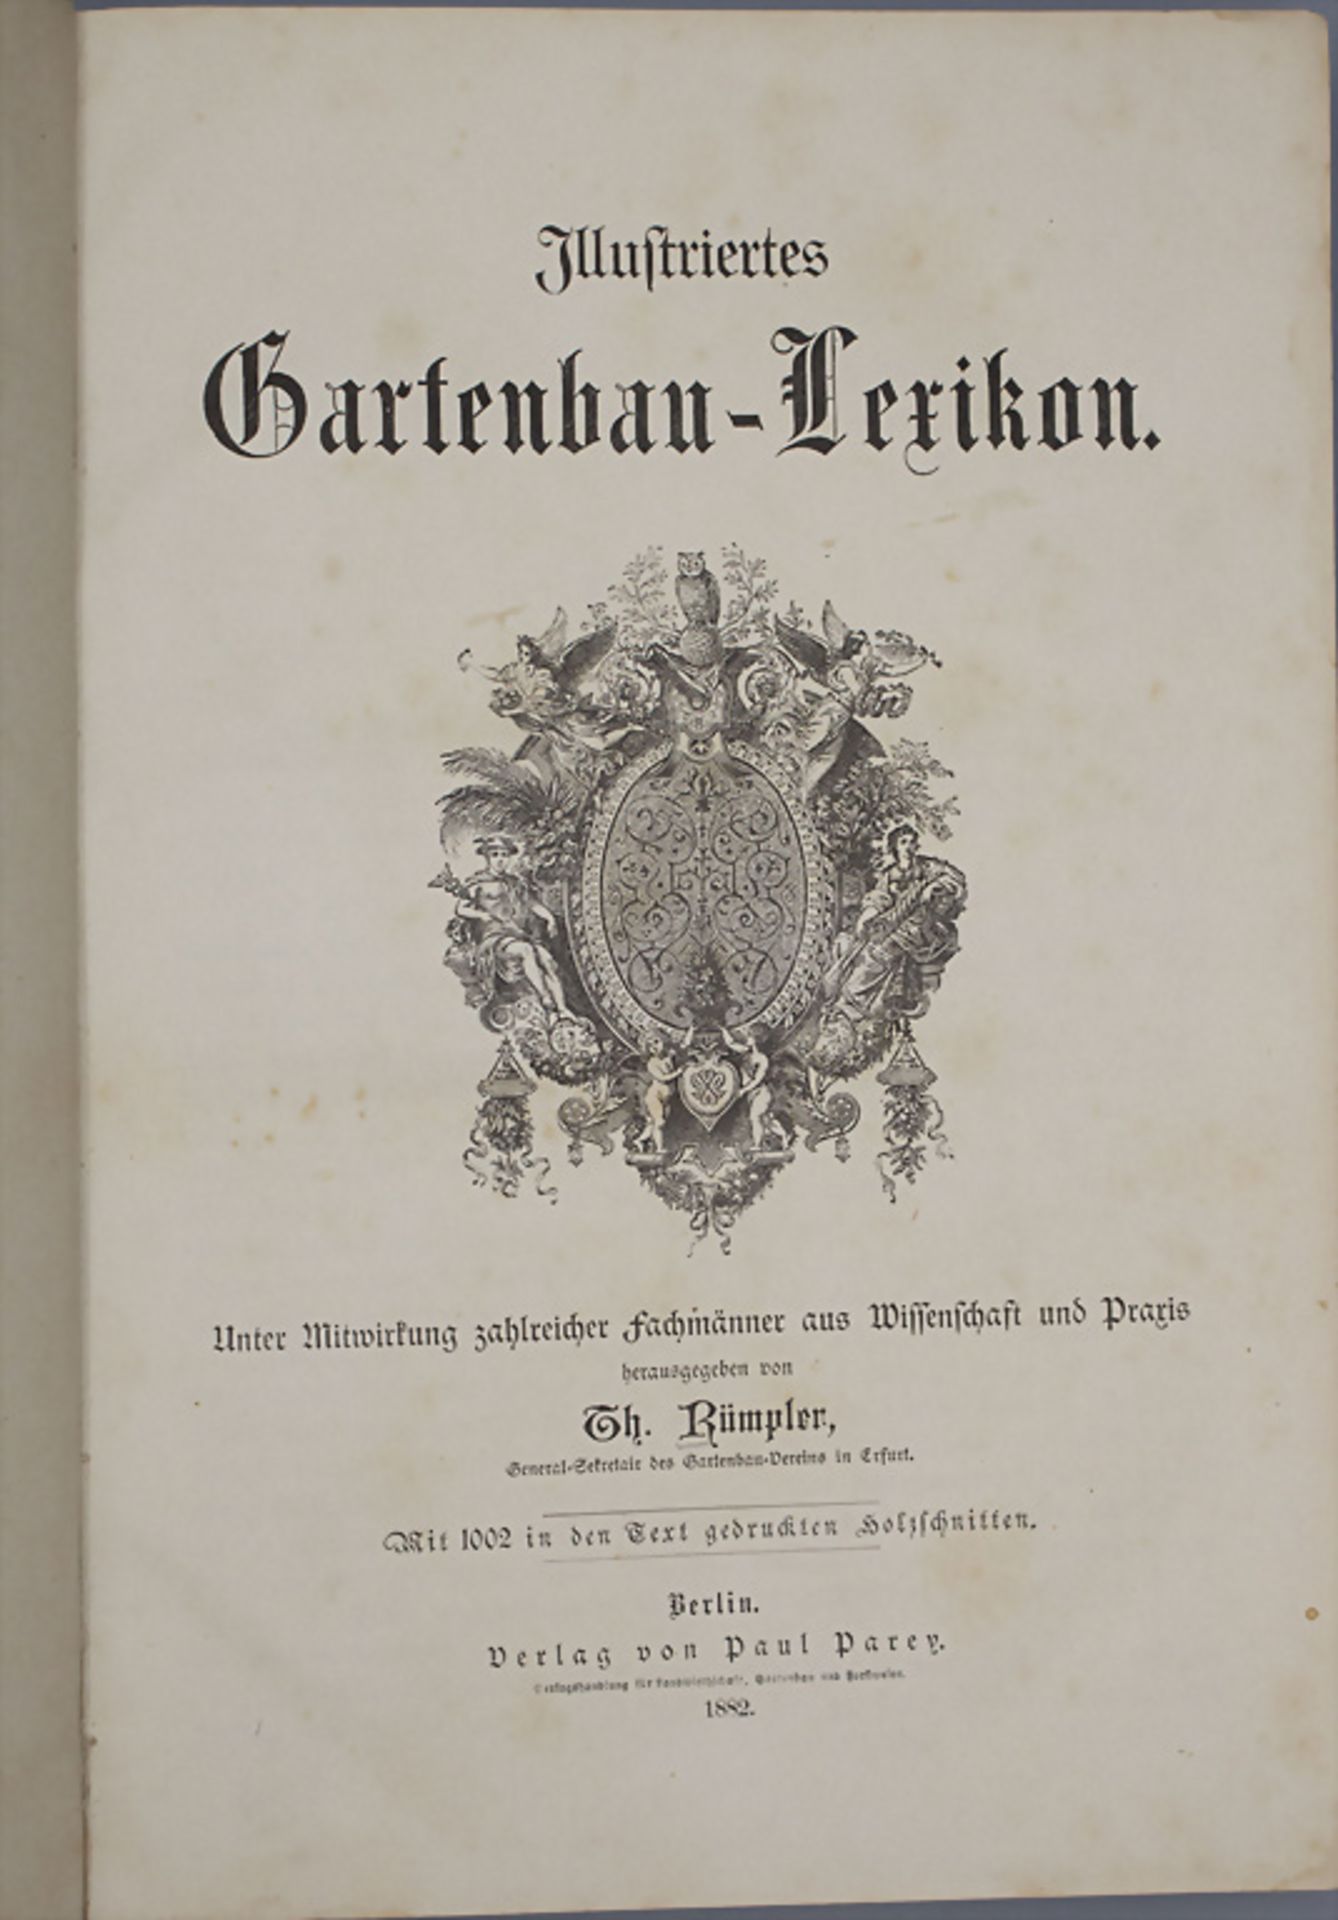 Th. Rümpler: 'Illustriertes Gartenbau-Lexikon', 1882 - Image 2 of 6